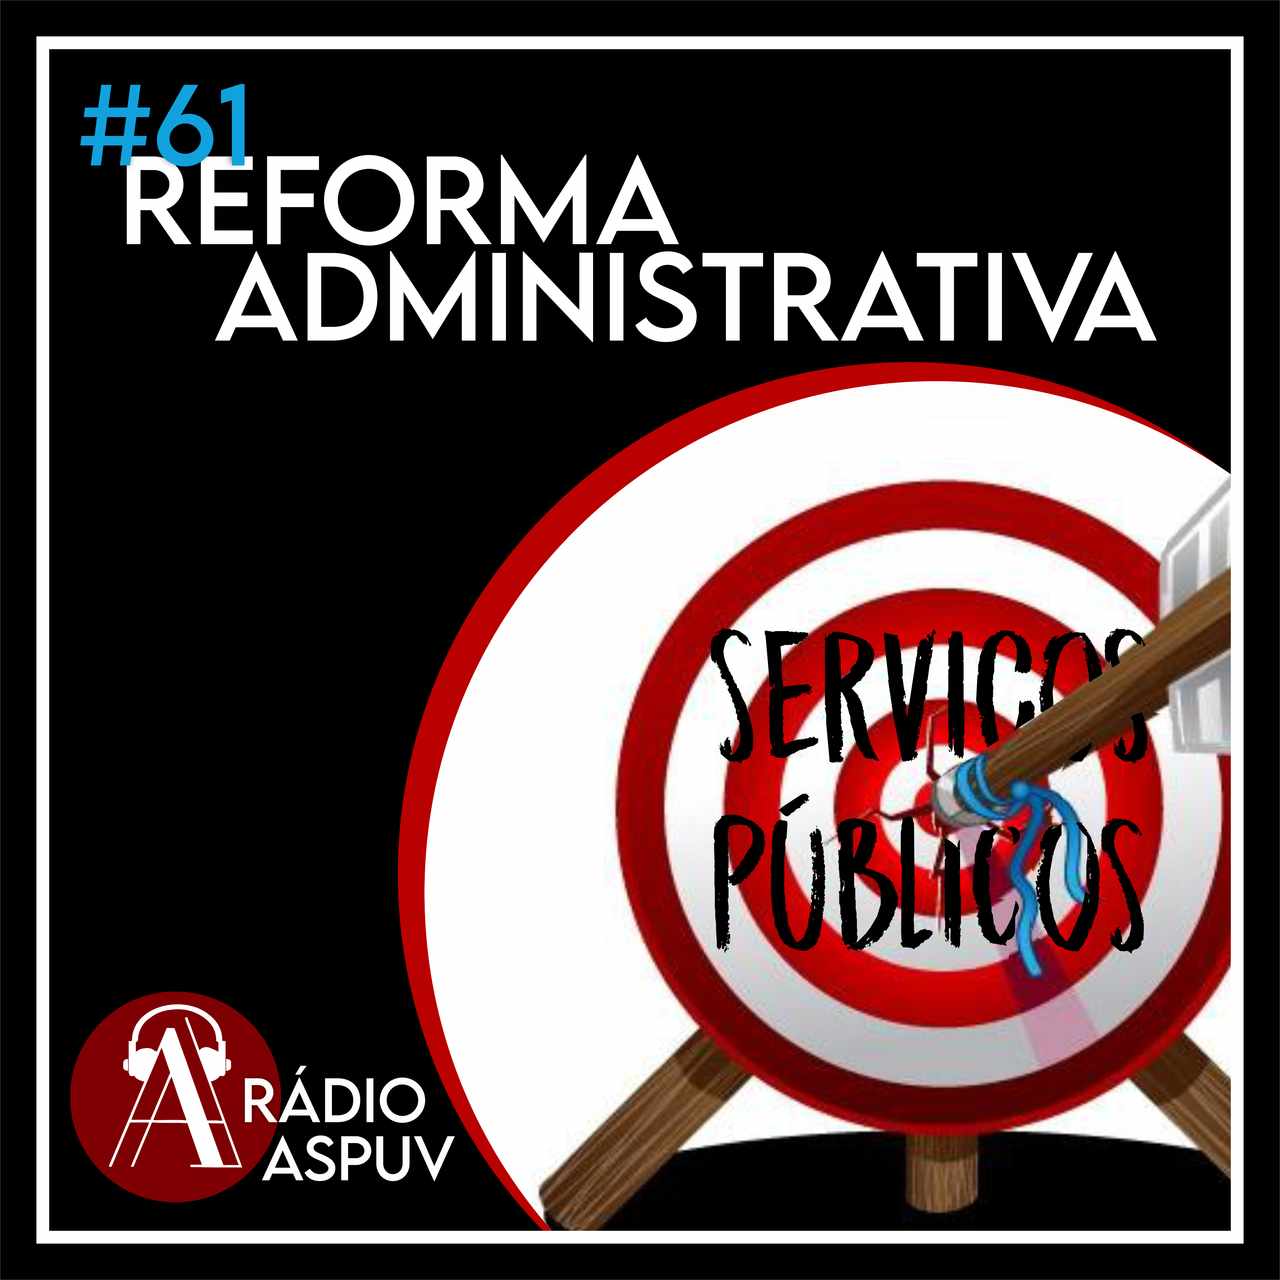 Rádio ASPUV #61 Reforma Administrativa